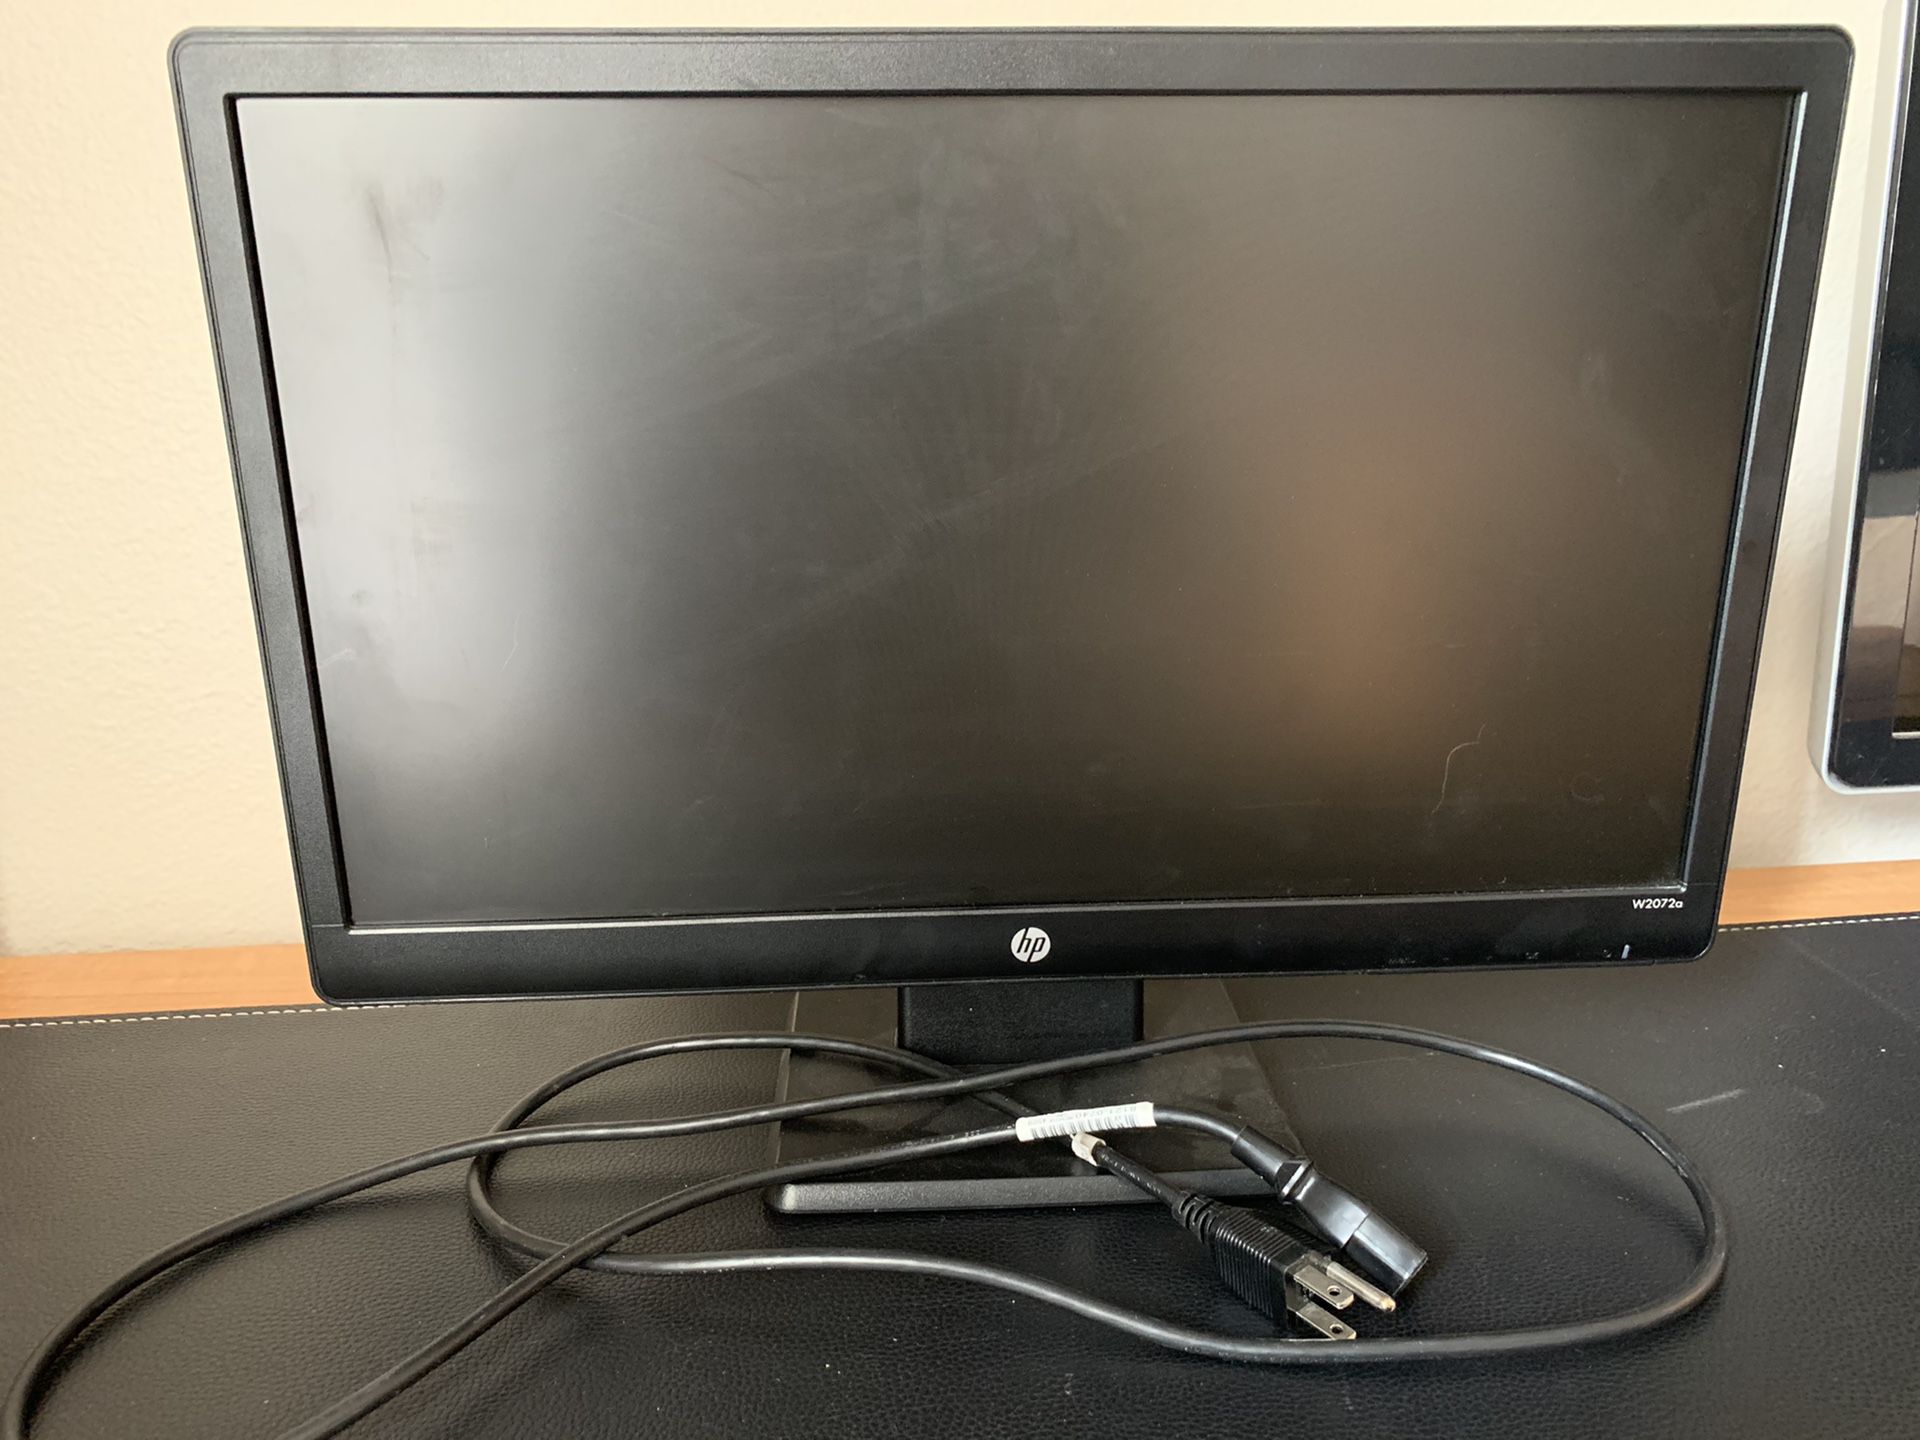 HP W2072a desktop monitor